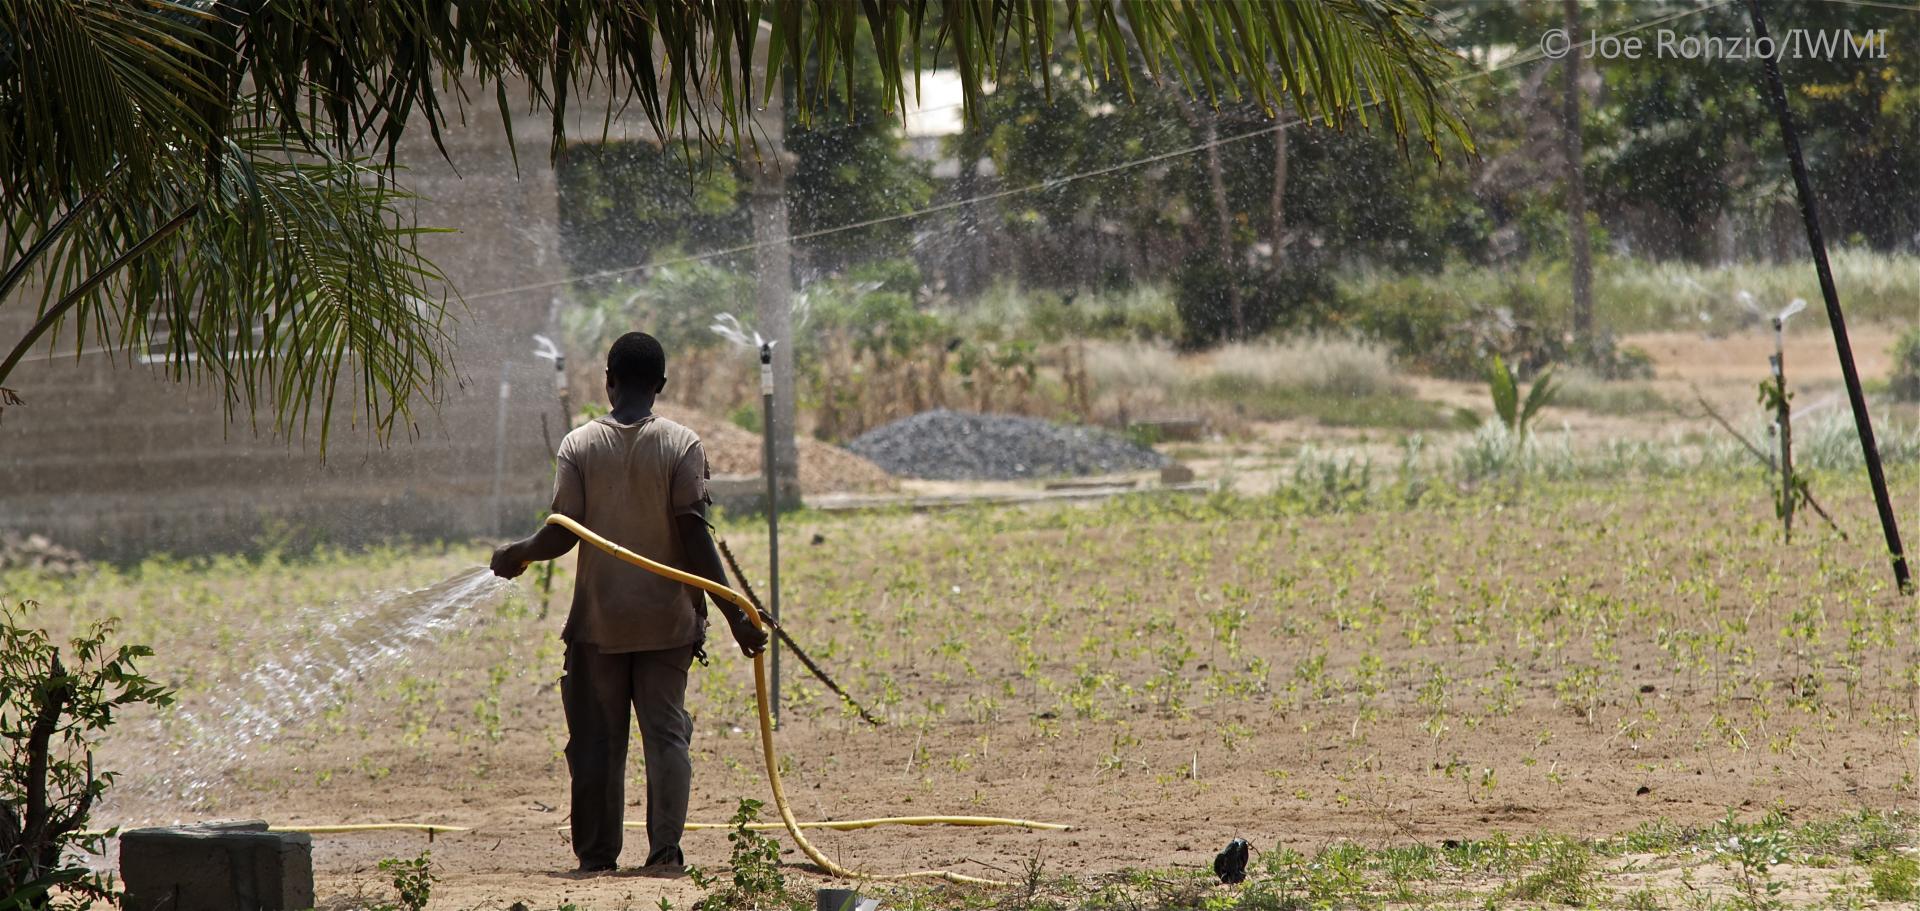 Irrigation with sprinklers in Ghana